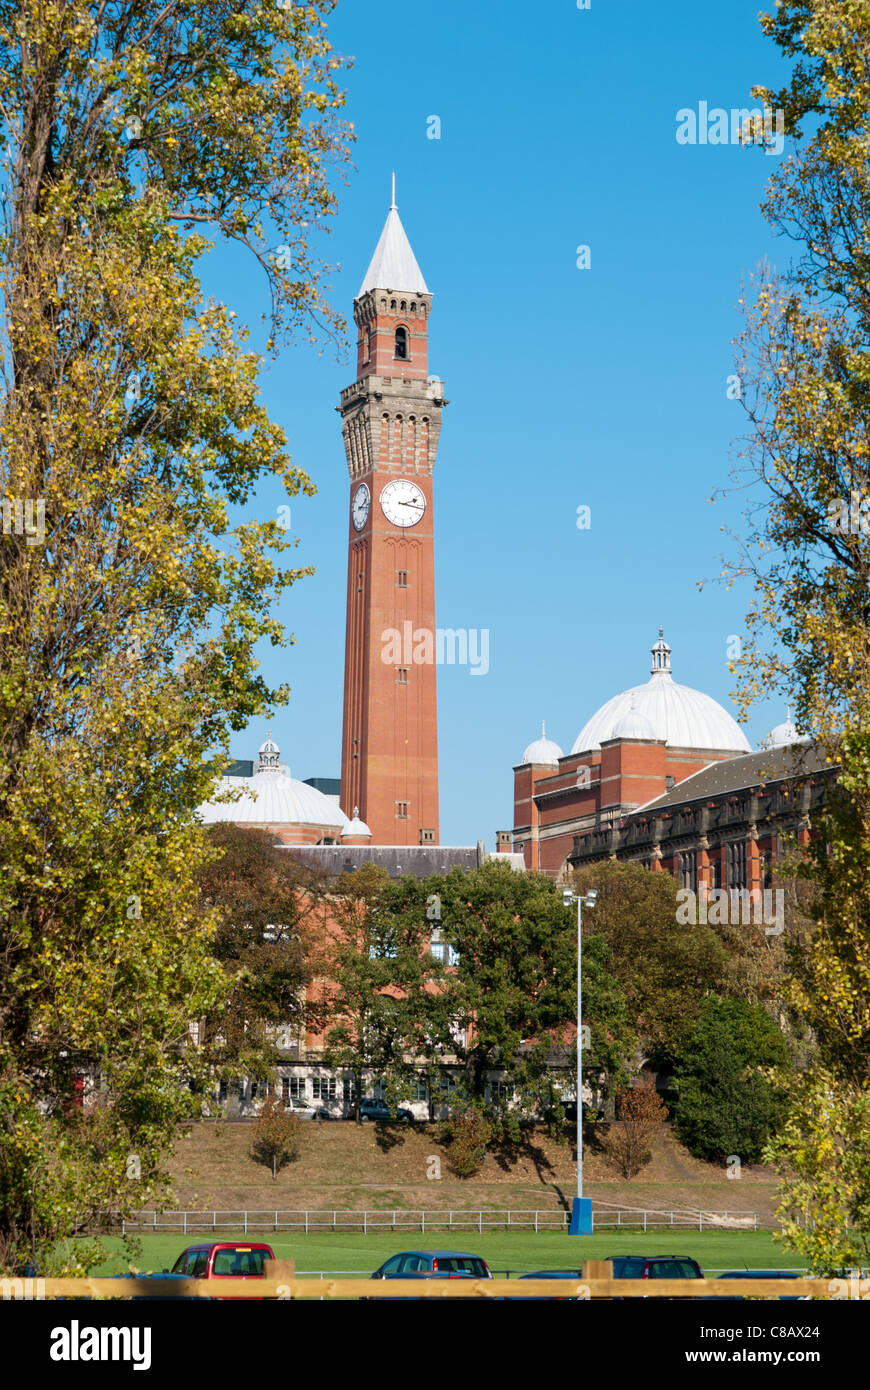 Birmingham University Clock Tower High Resolution Stock Photography and